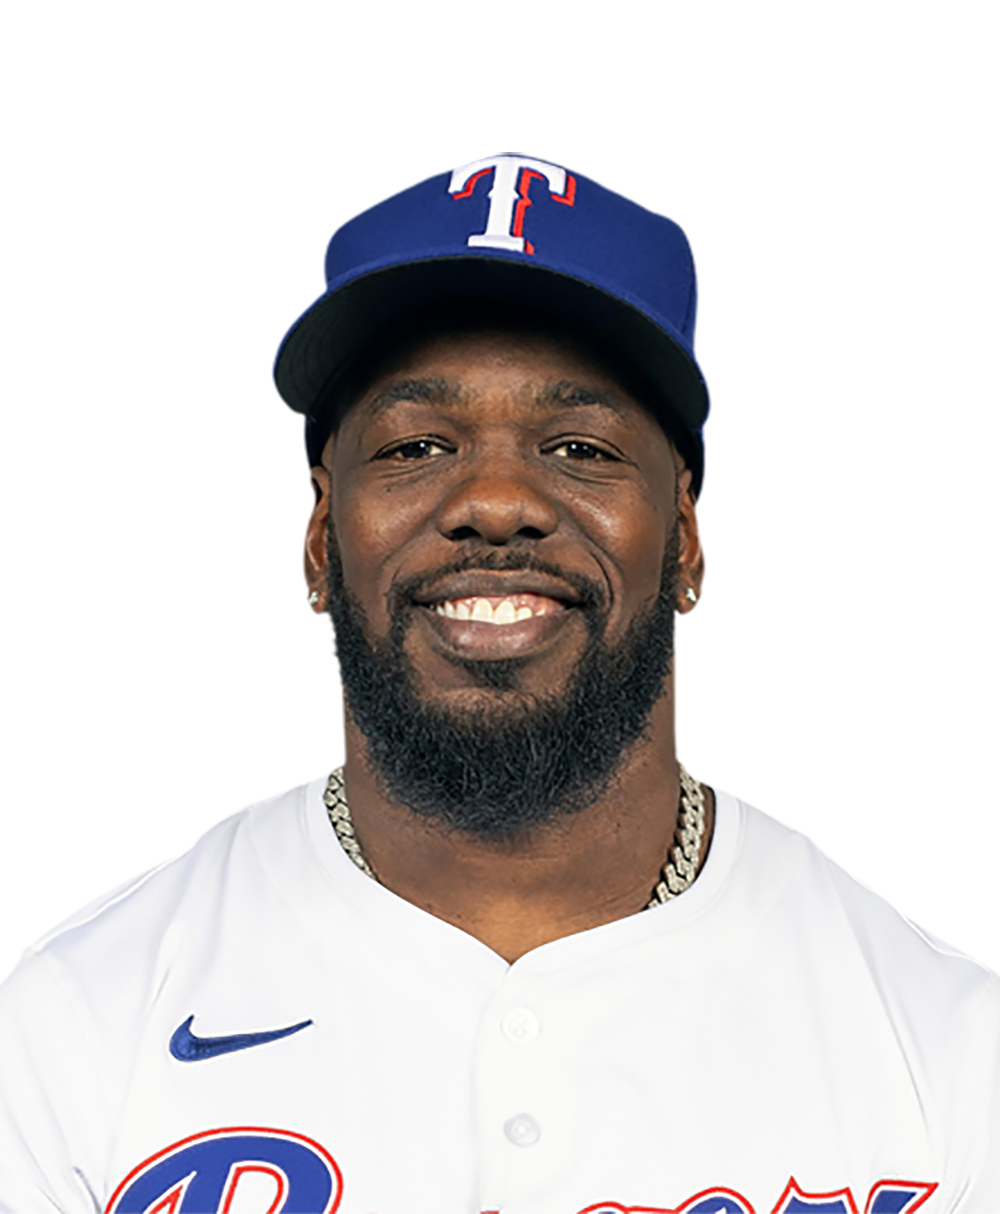 Texas Rangers on X: Garv is hitting .414 over his last 8 games